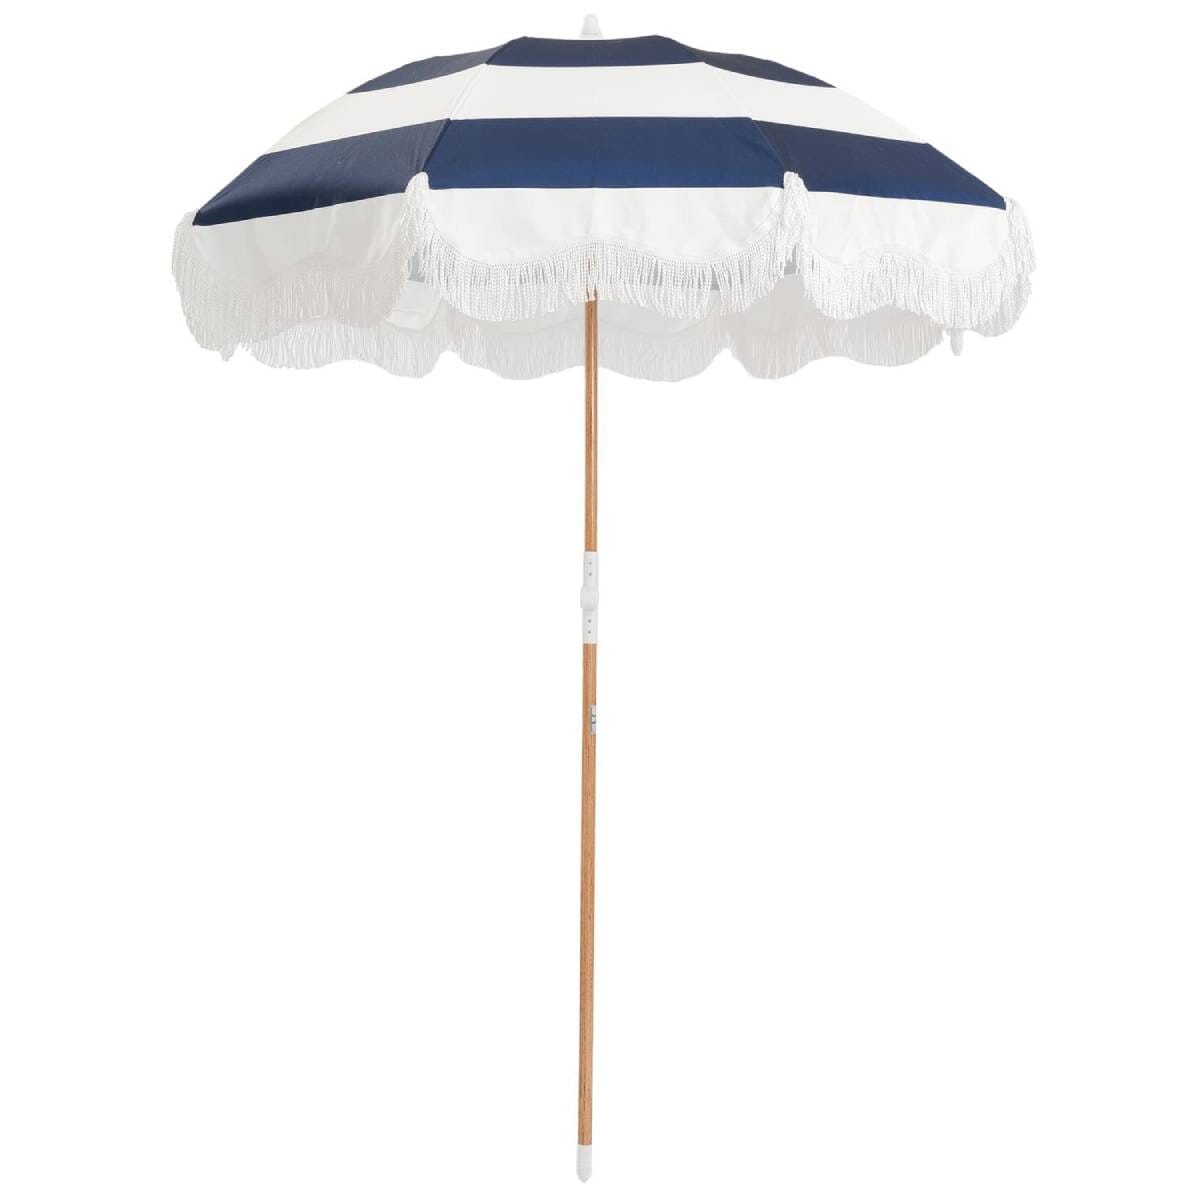 studio image of navy capri holiday umbrella